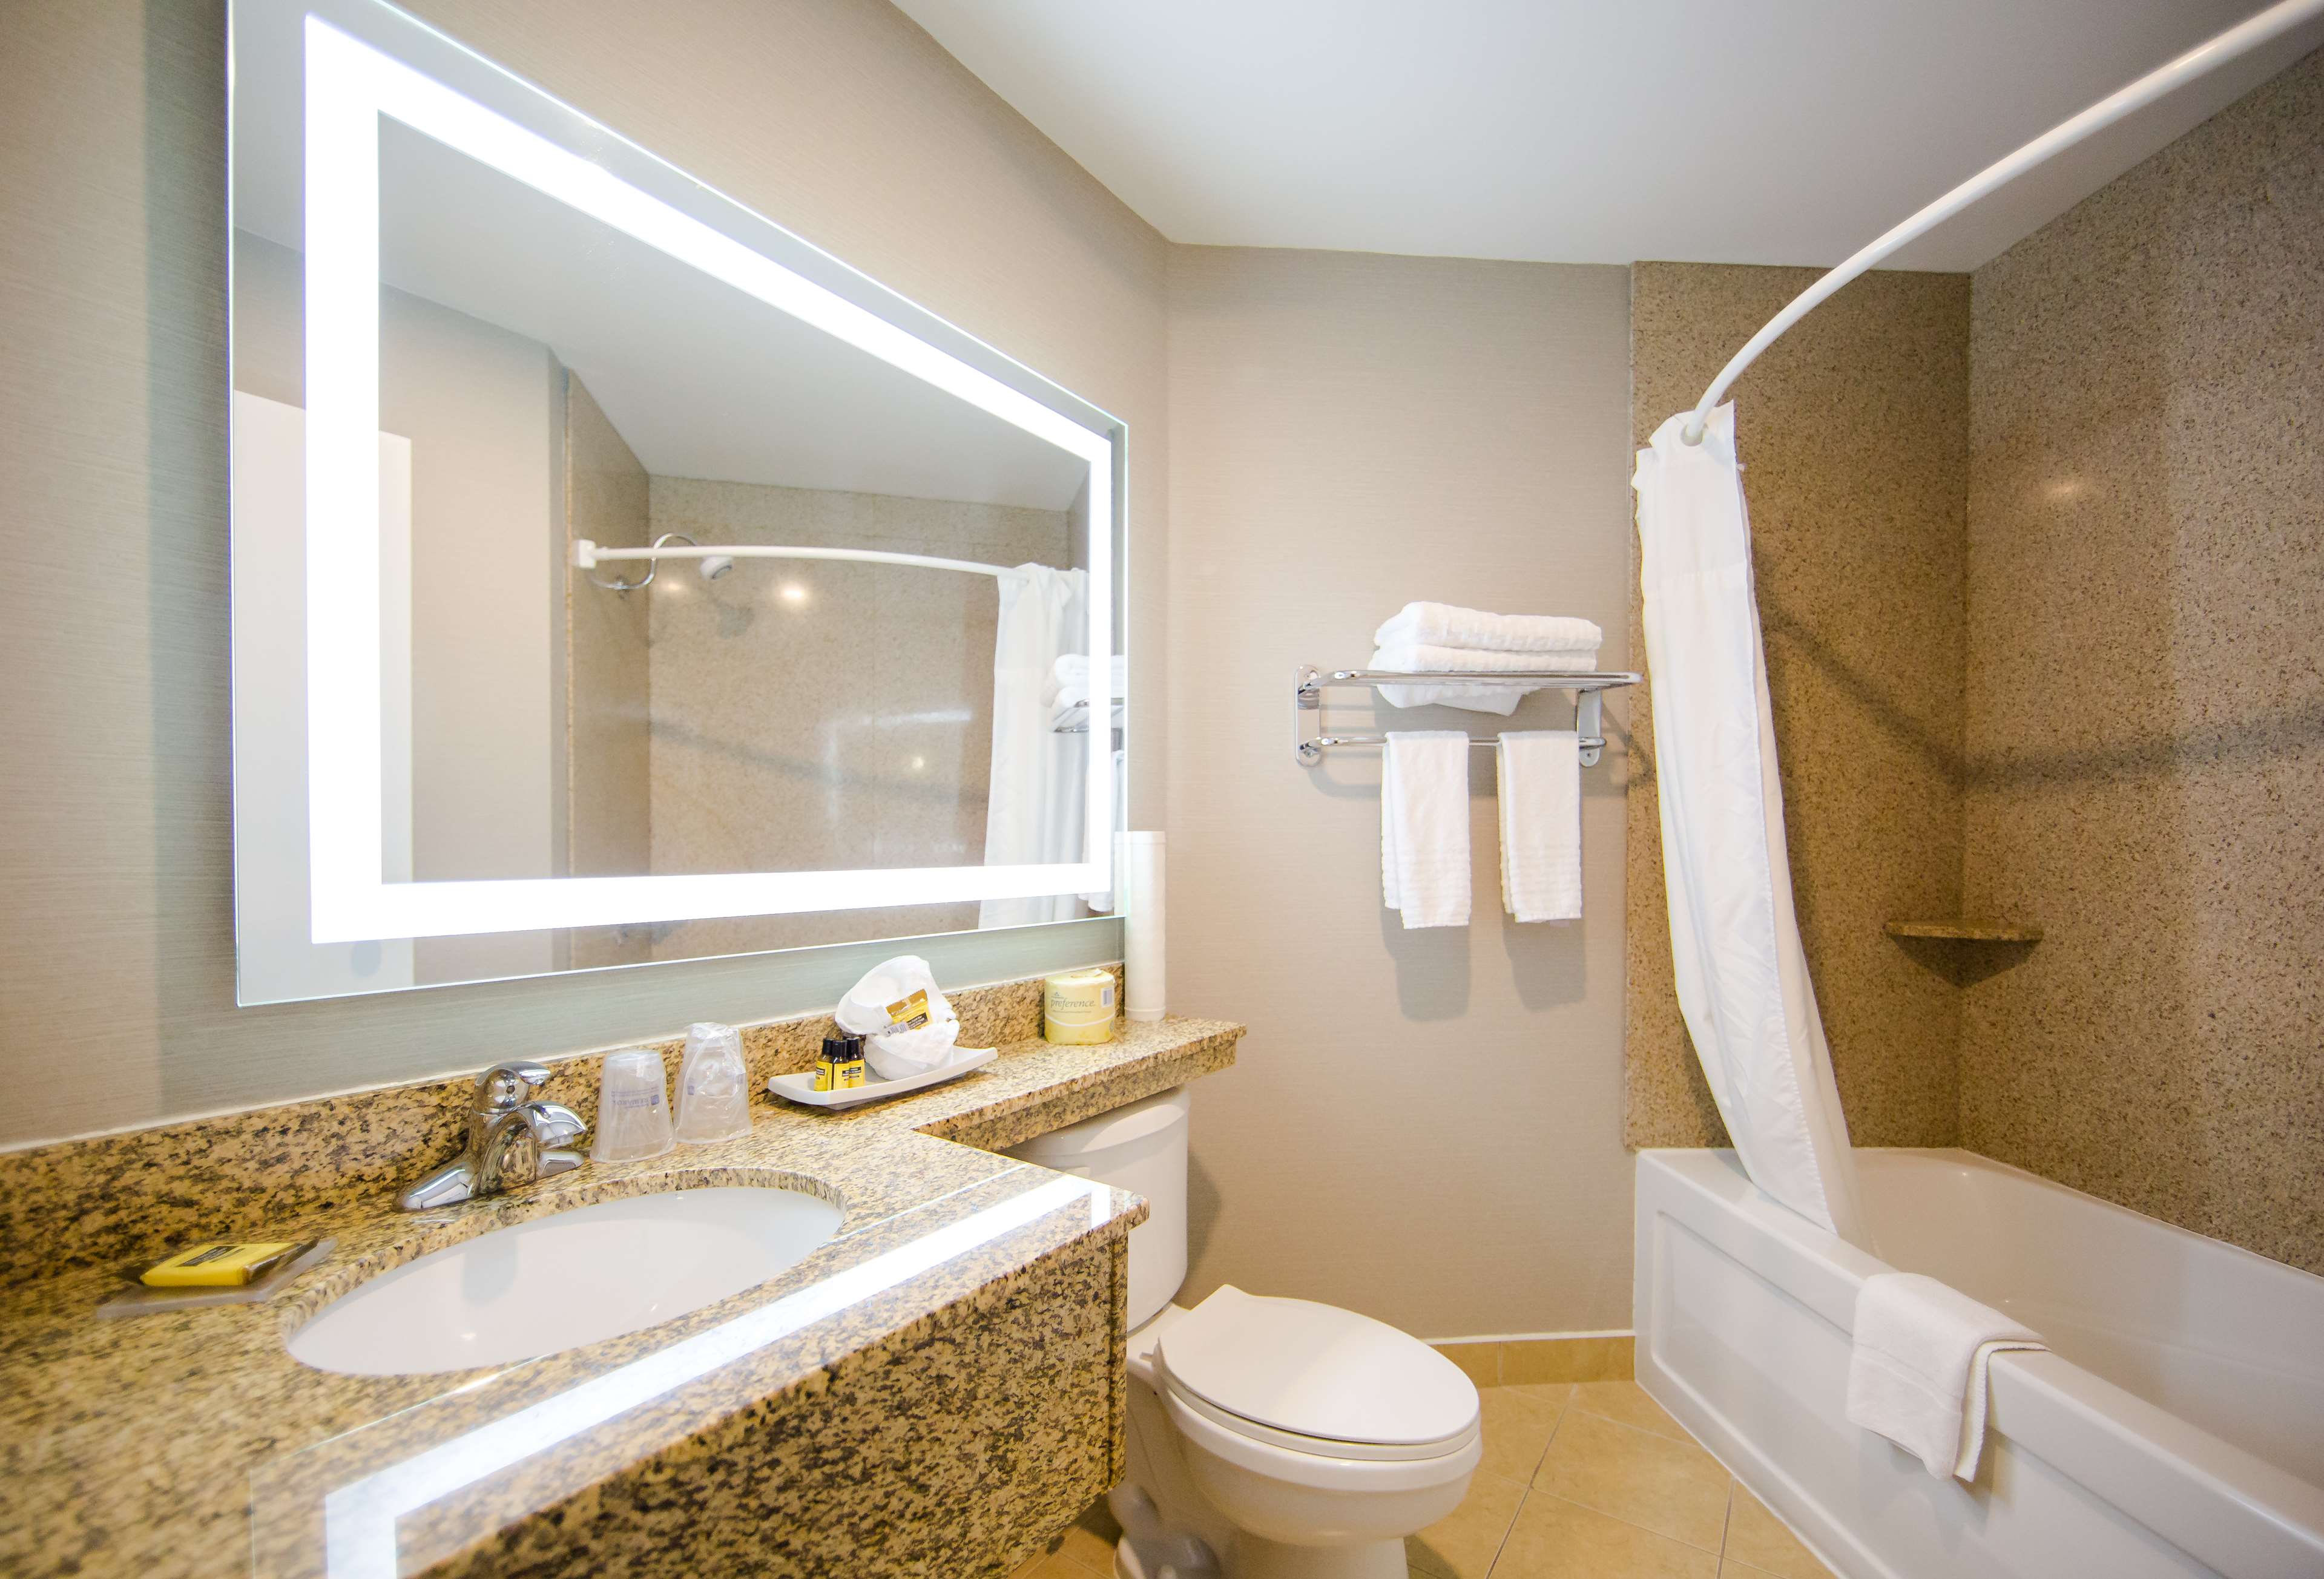 Executive King Bathroom Best Western Plus Ottawa Kanata Hotel & Conference Centre Ottawa (613)828-2741